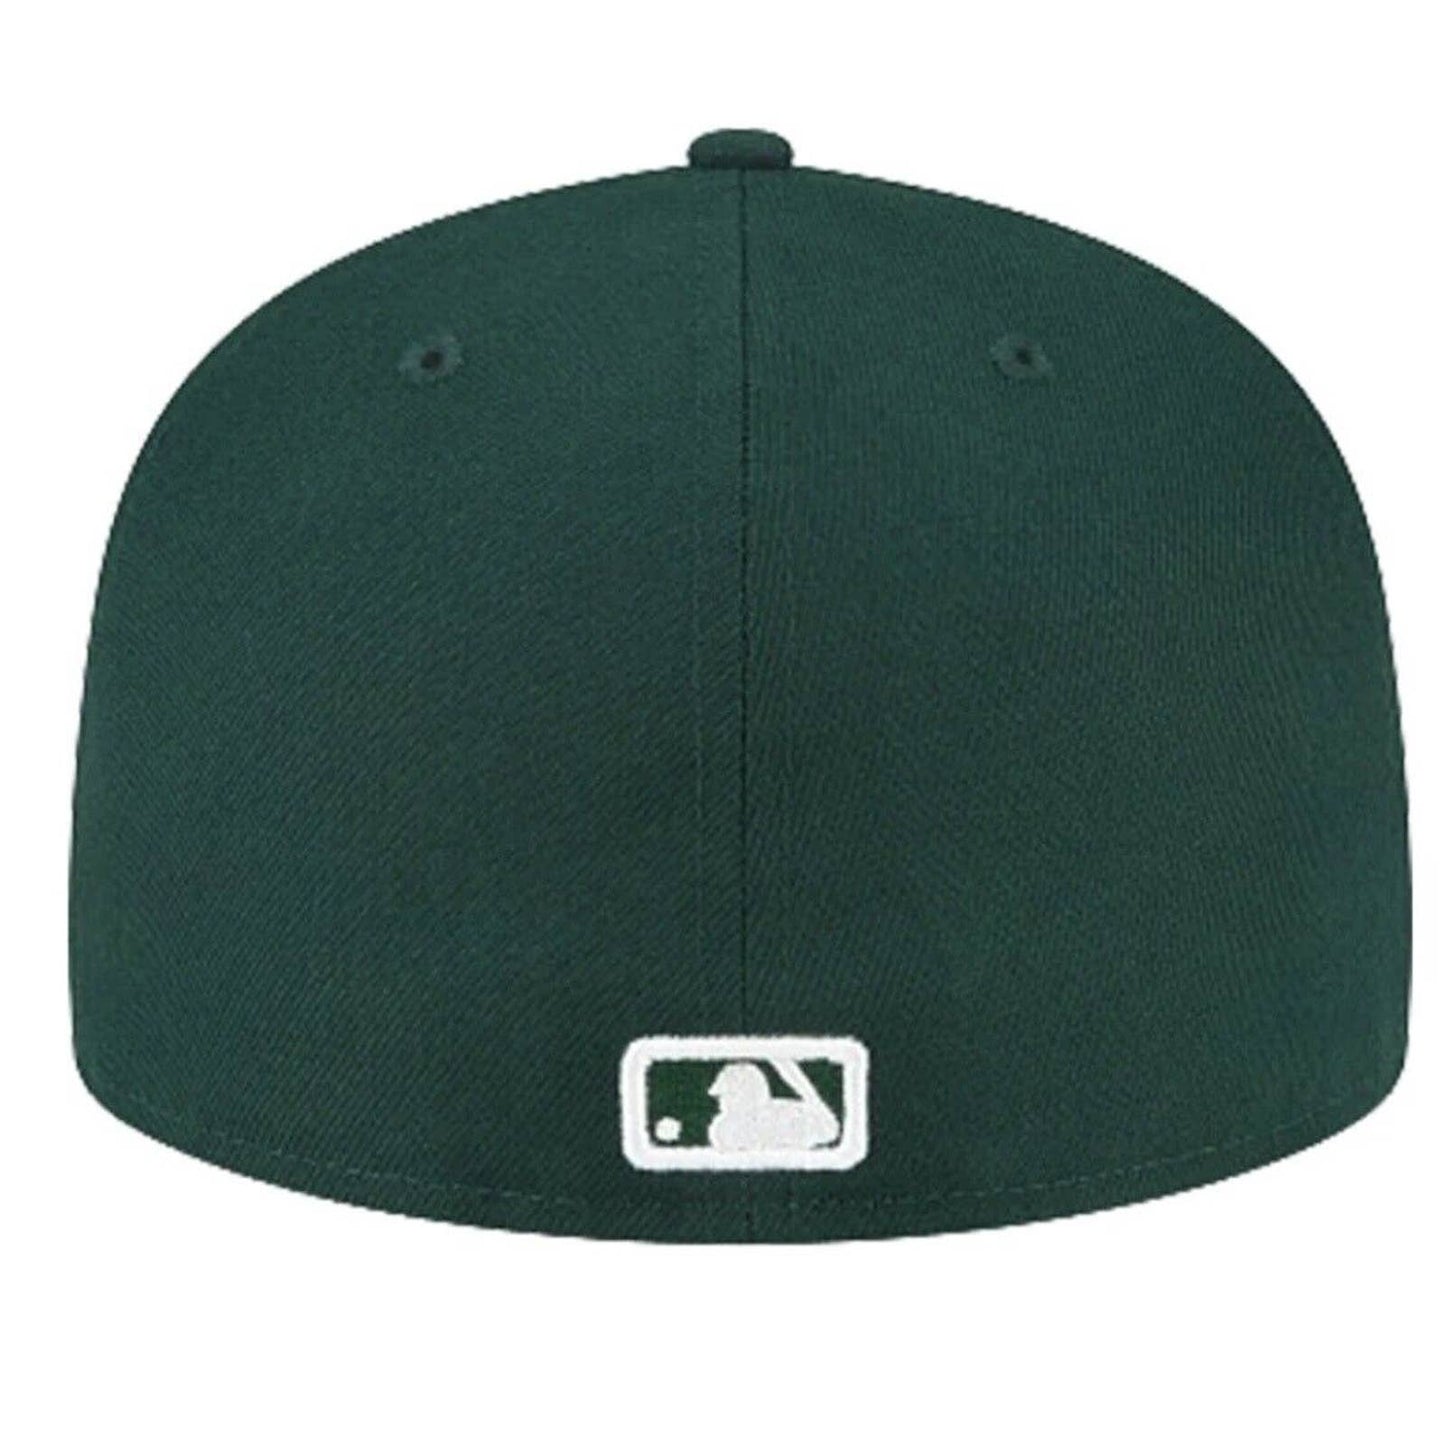 New York Yankees MLB Era 59FIFTY Fitted Cap HAT 5950 DARK GREEN